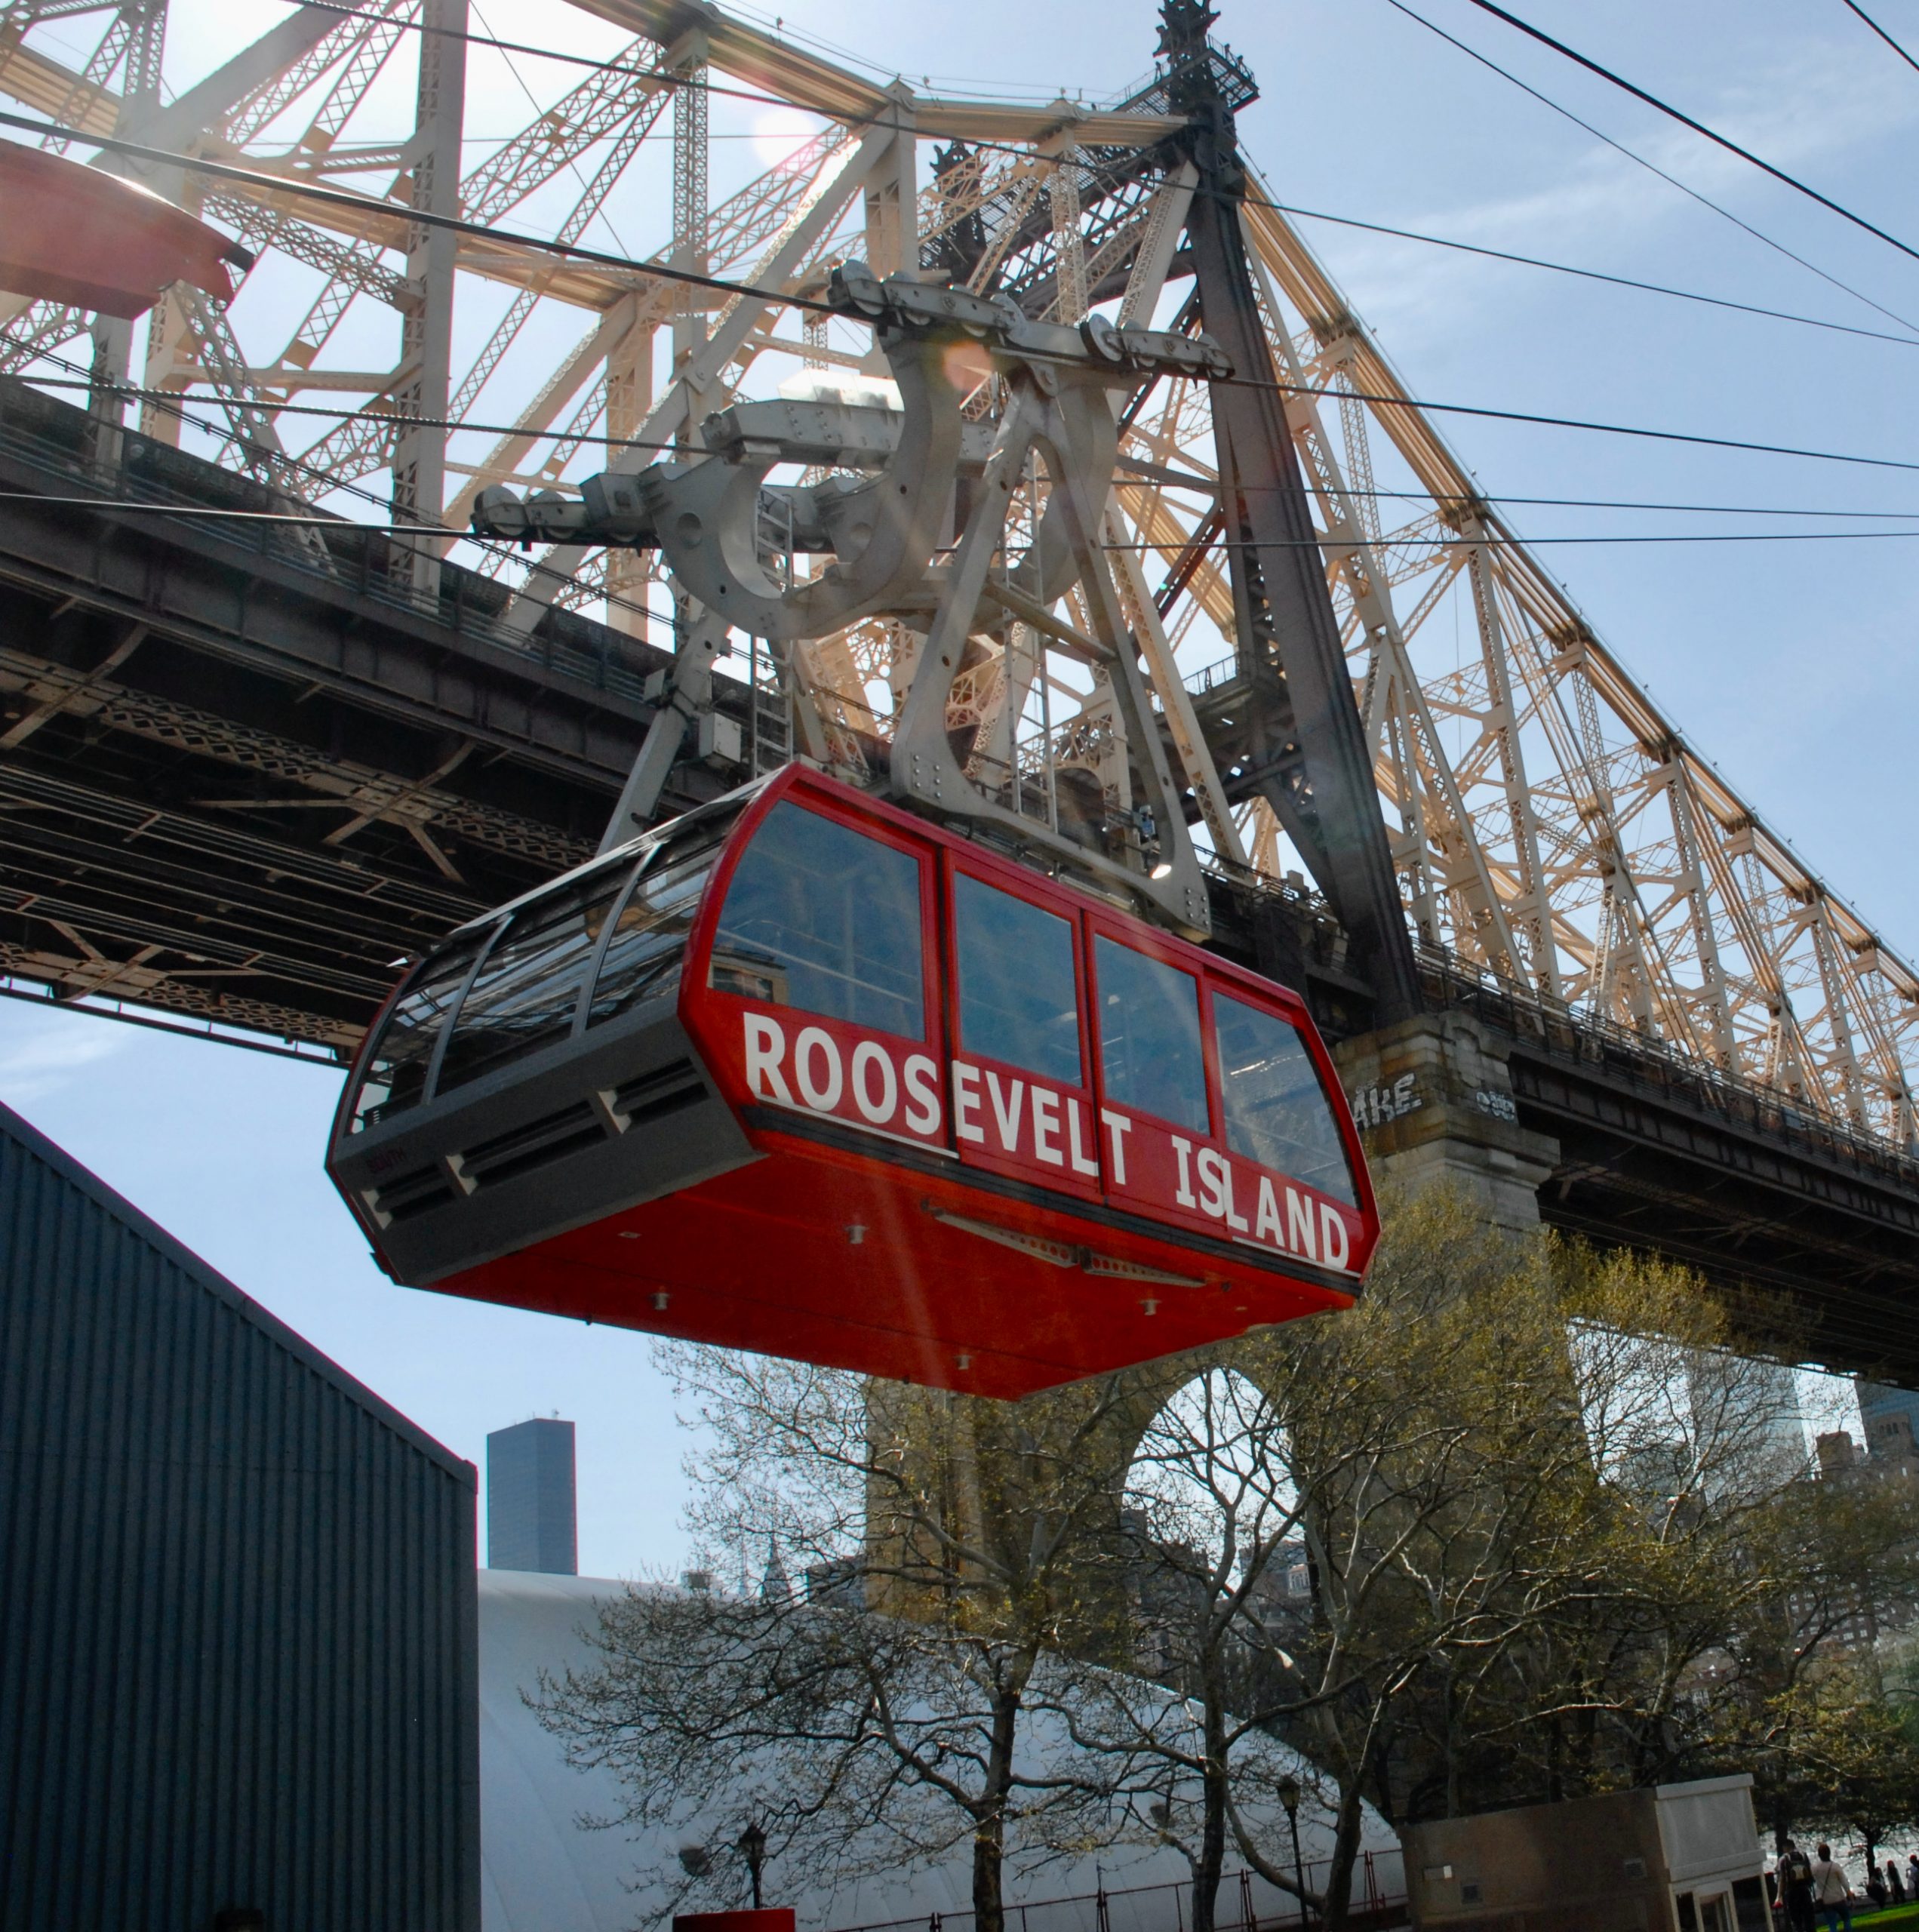 Roosevelt Island Tram at work